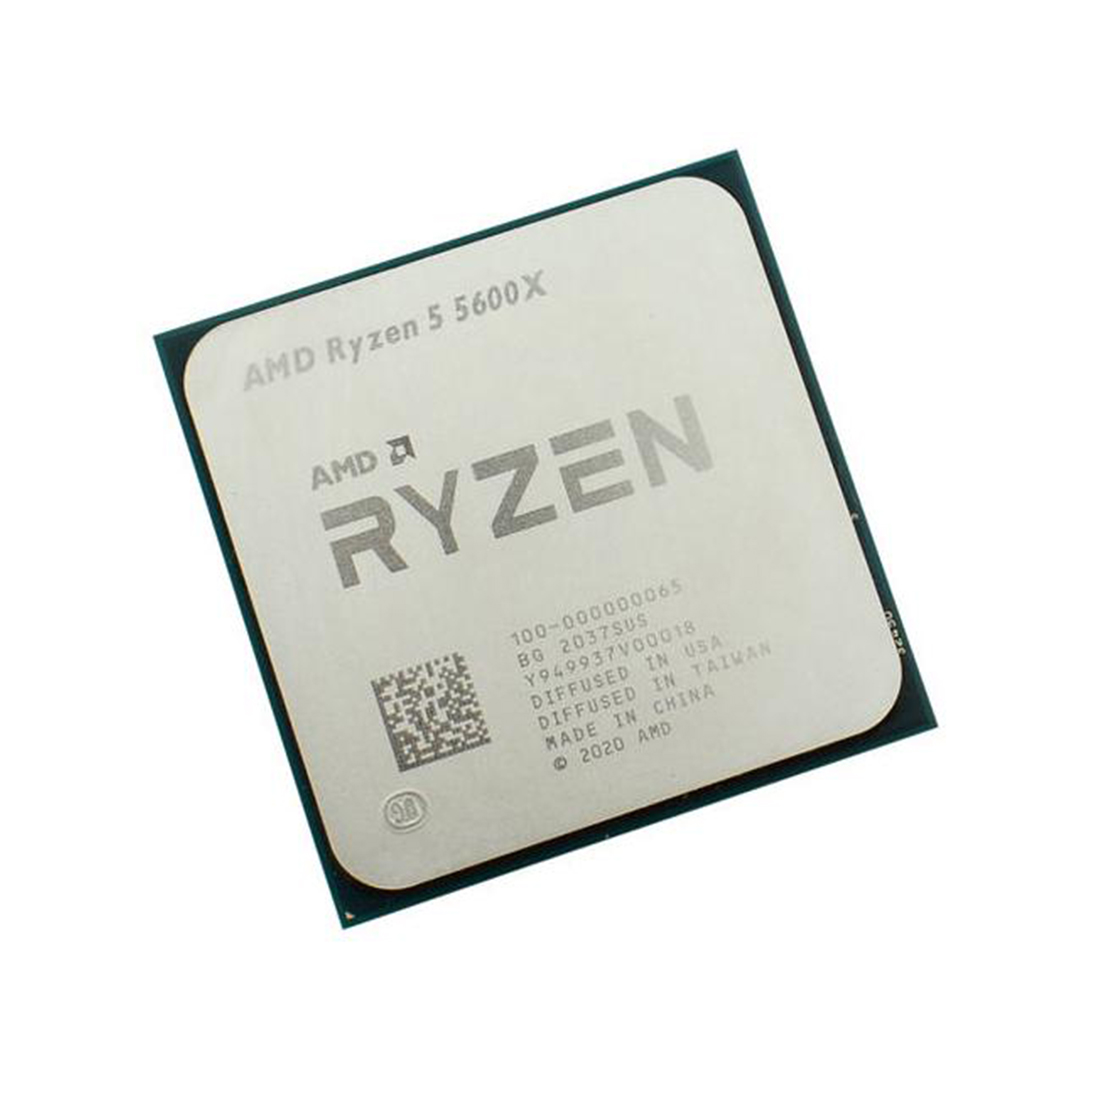 5 5600 сокет. Ryzen 5 5600. Процессор AMD Ryzen 5 5600x. Процессор AMD Ryzen 5 5600x PNG. Ryzen 5 5600 фото.